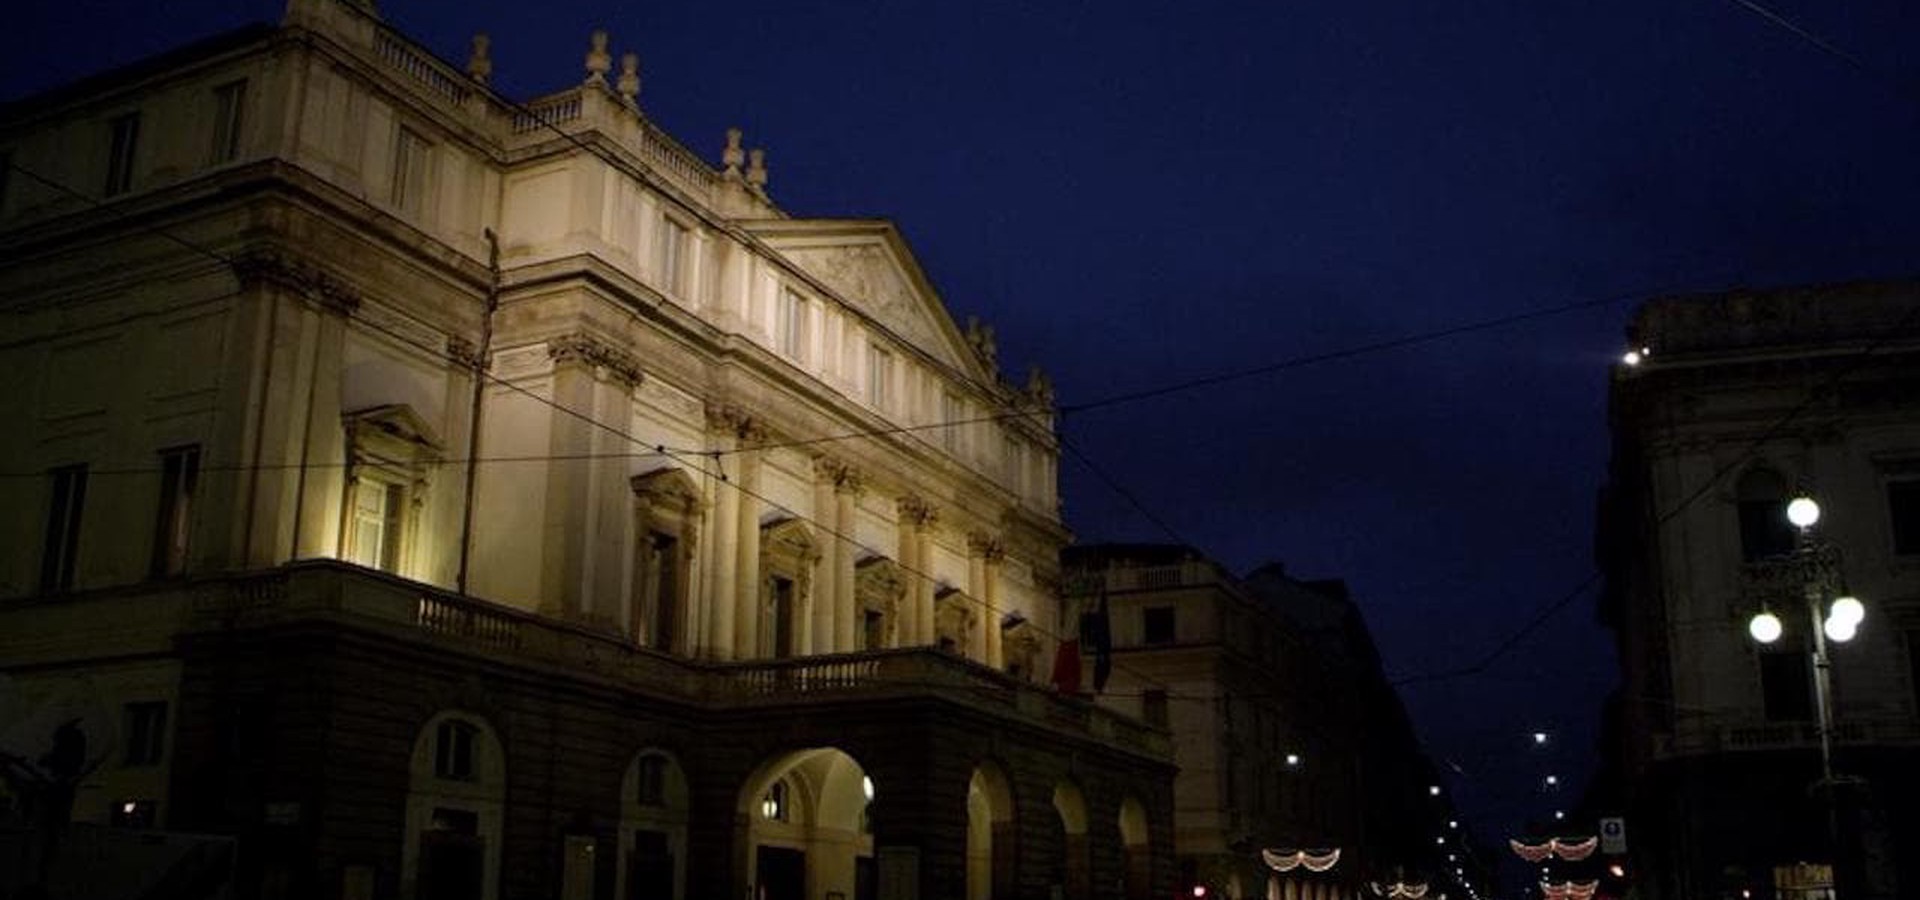 Teatro Alla Scala: The Temple of Wonders